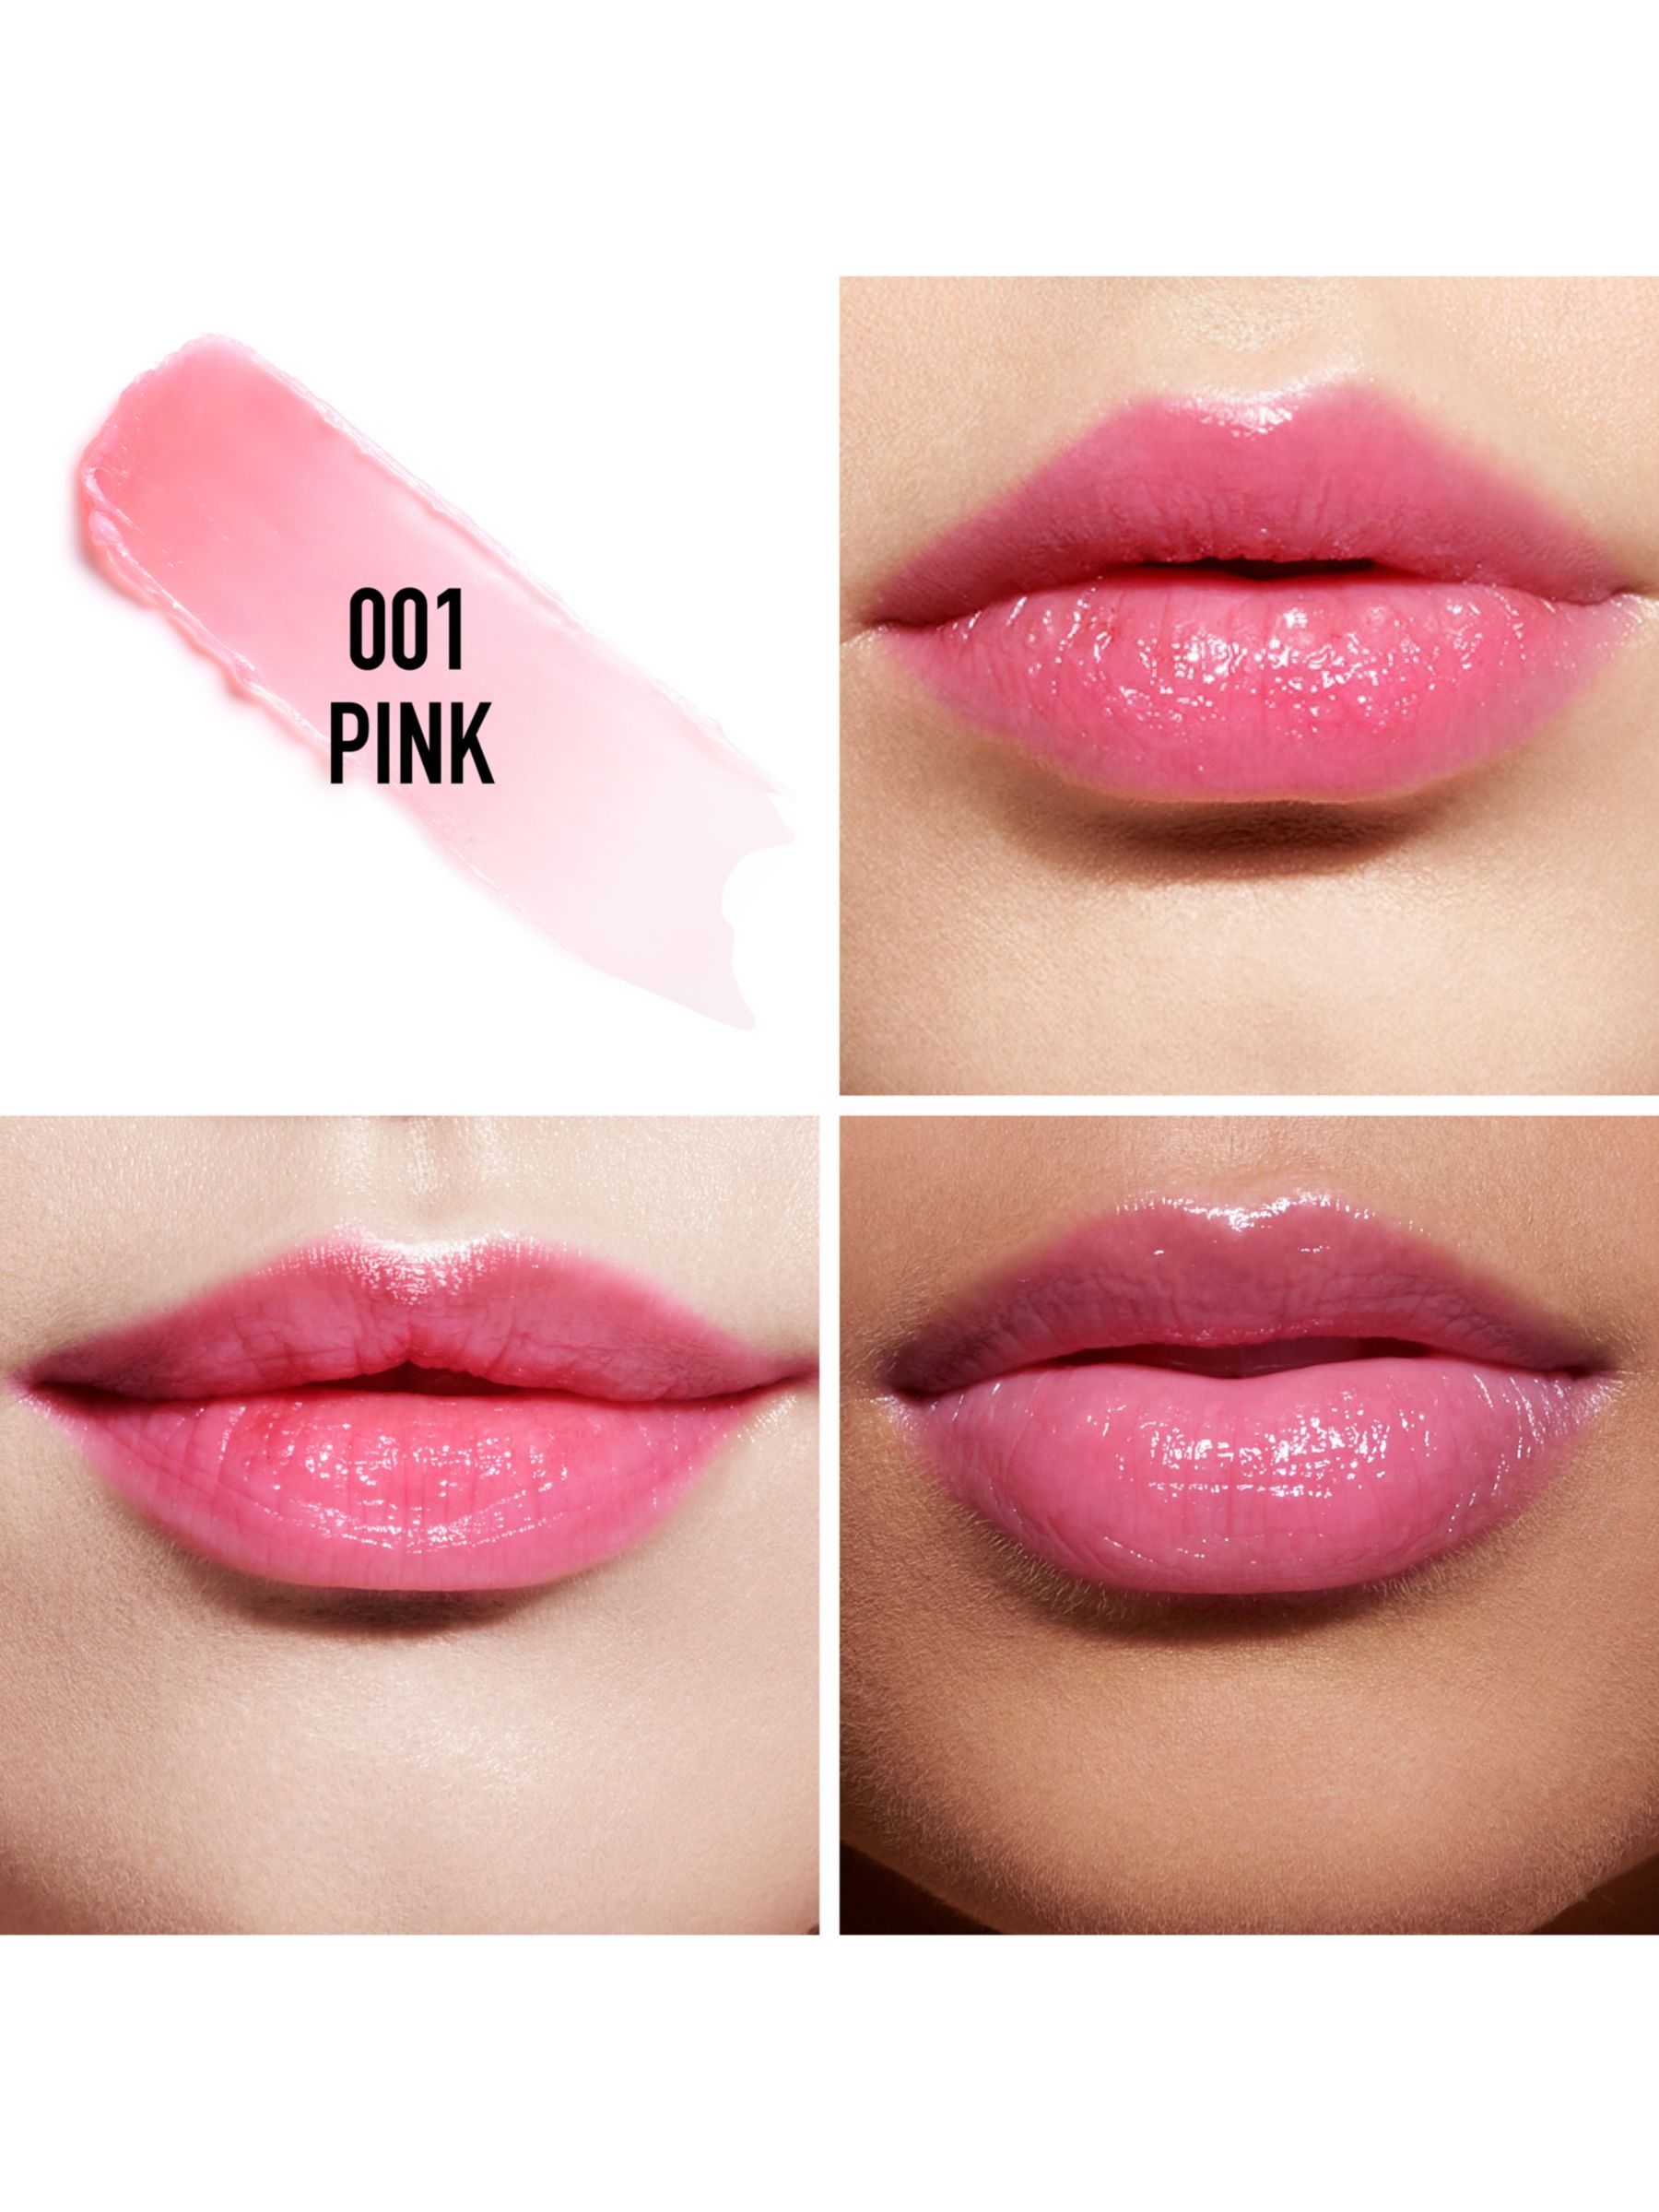 dior ultra pink lip glow